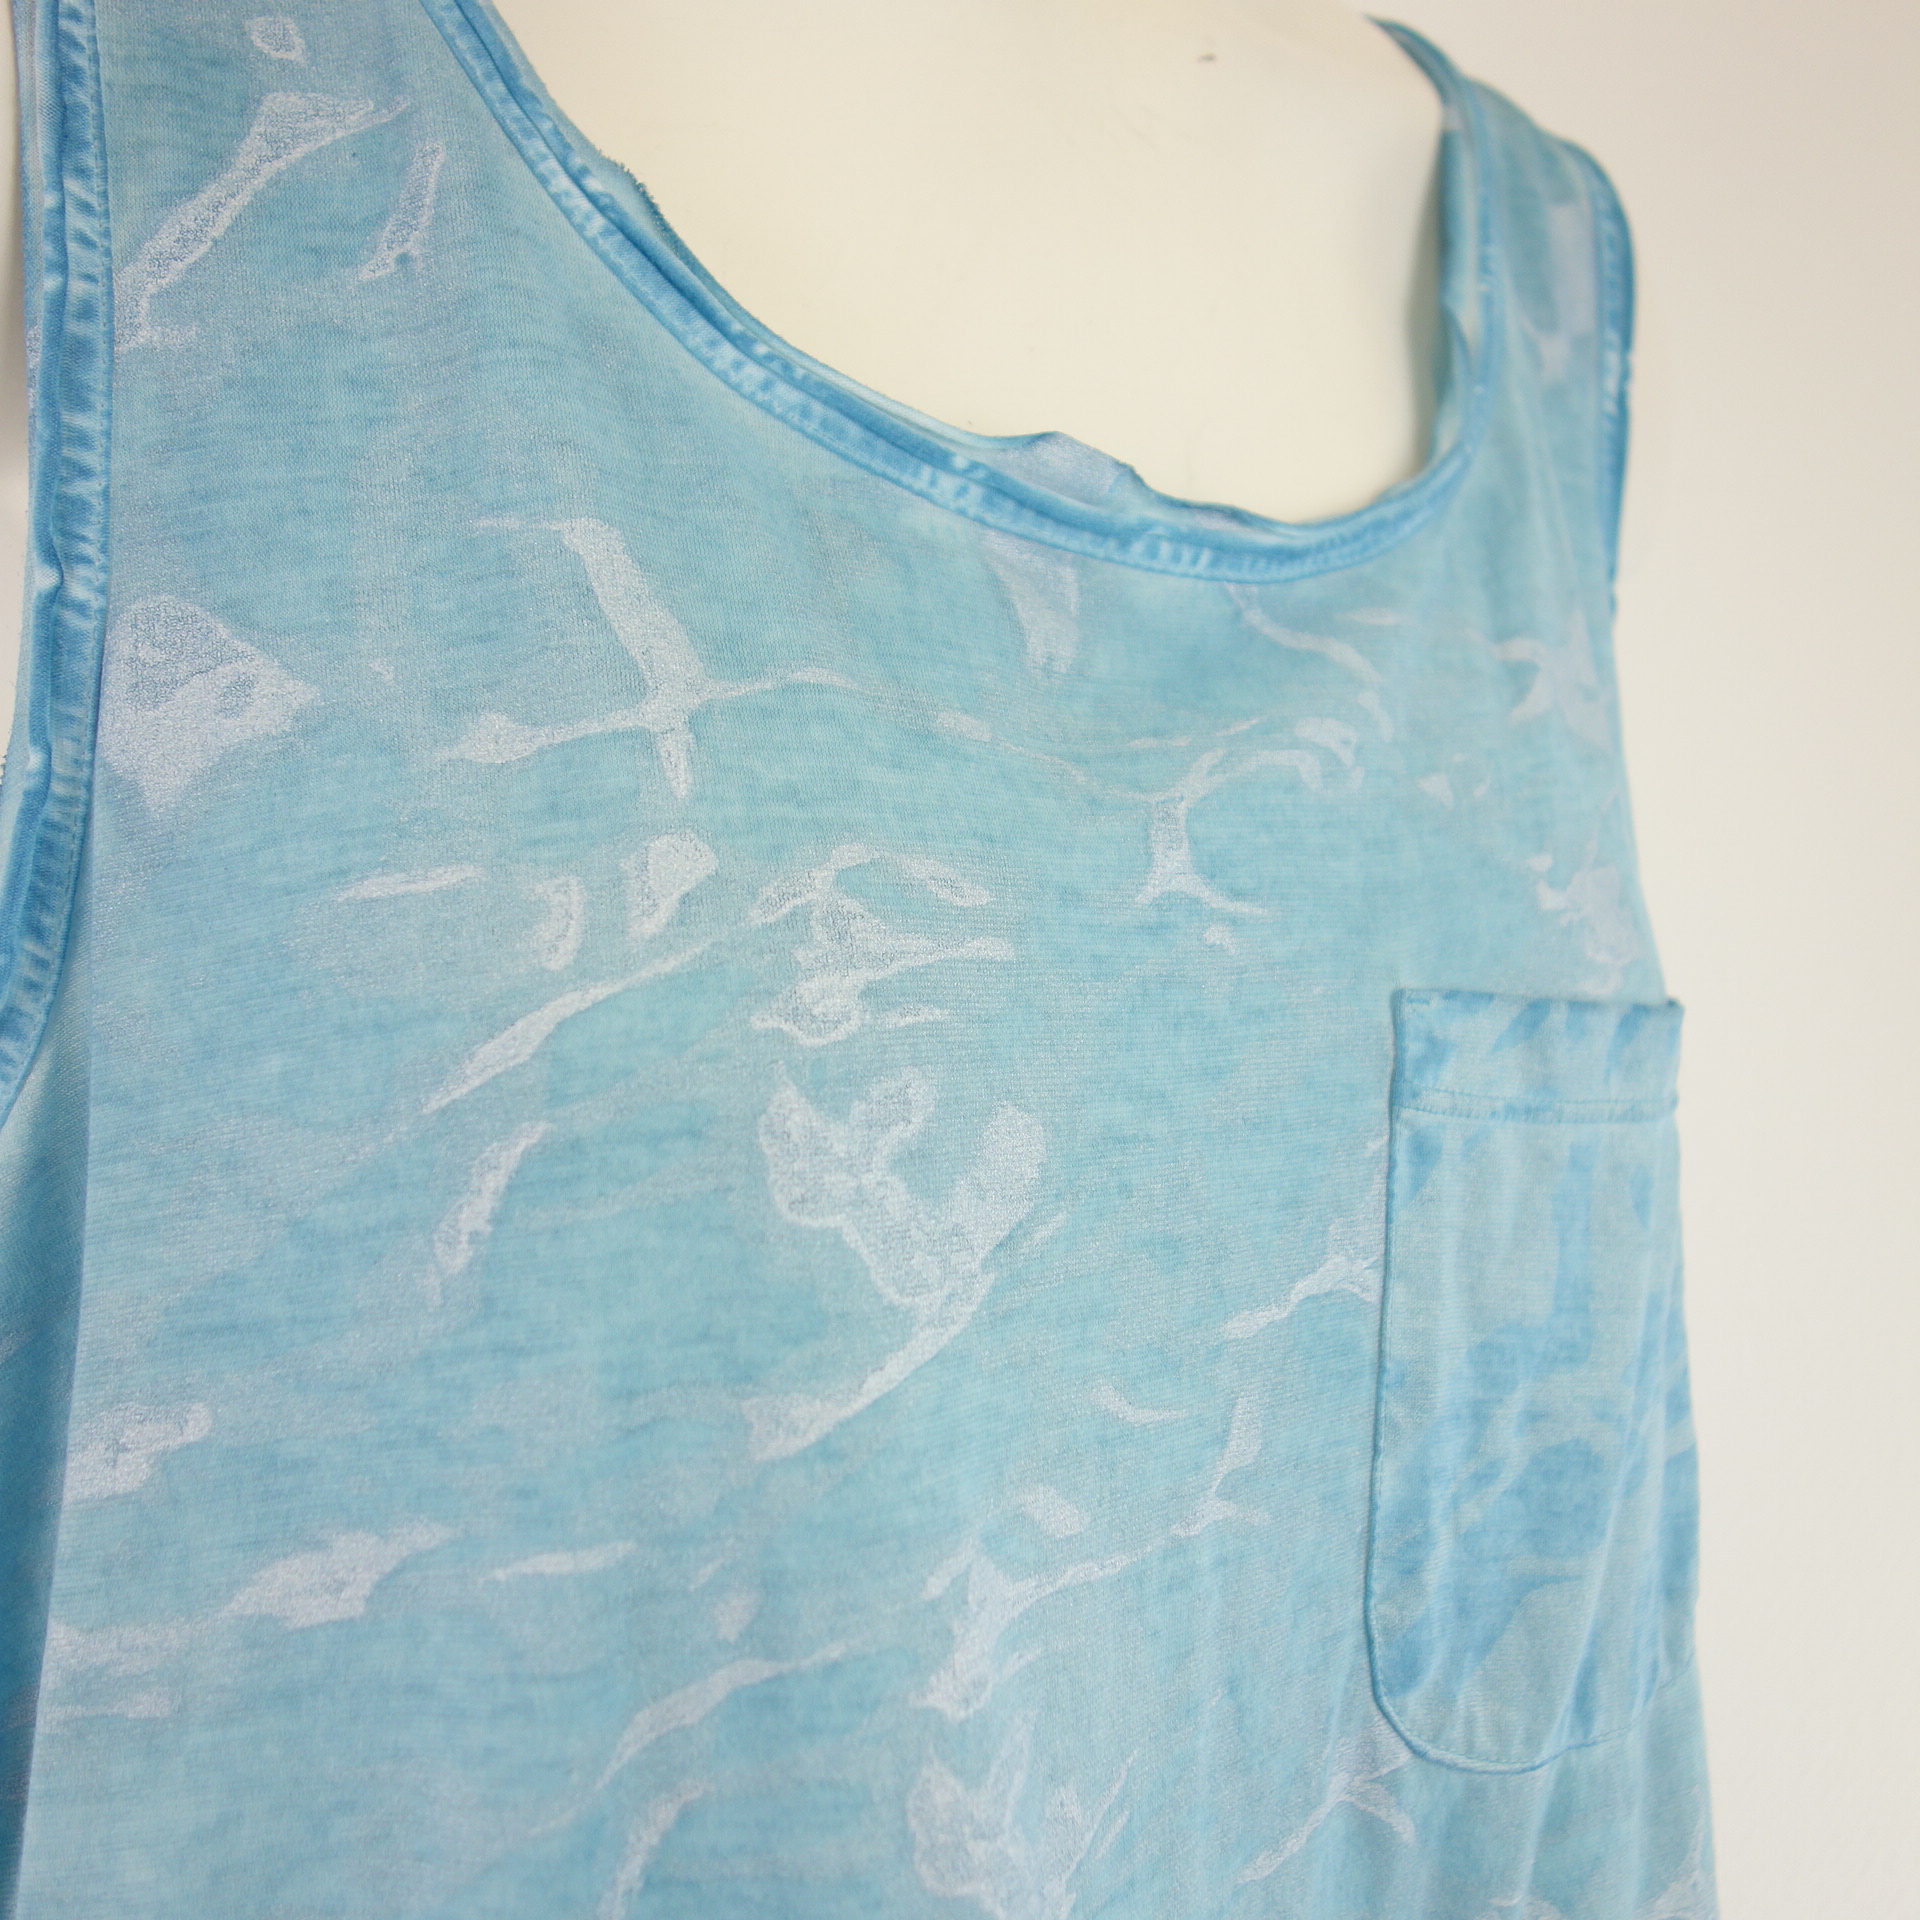 MARC CAIN Sports Damen Shirt Top Damenshirt Blau Batik 100% Baumwolle Neu